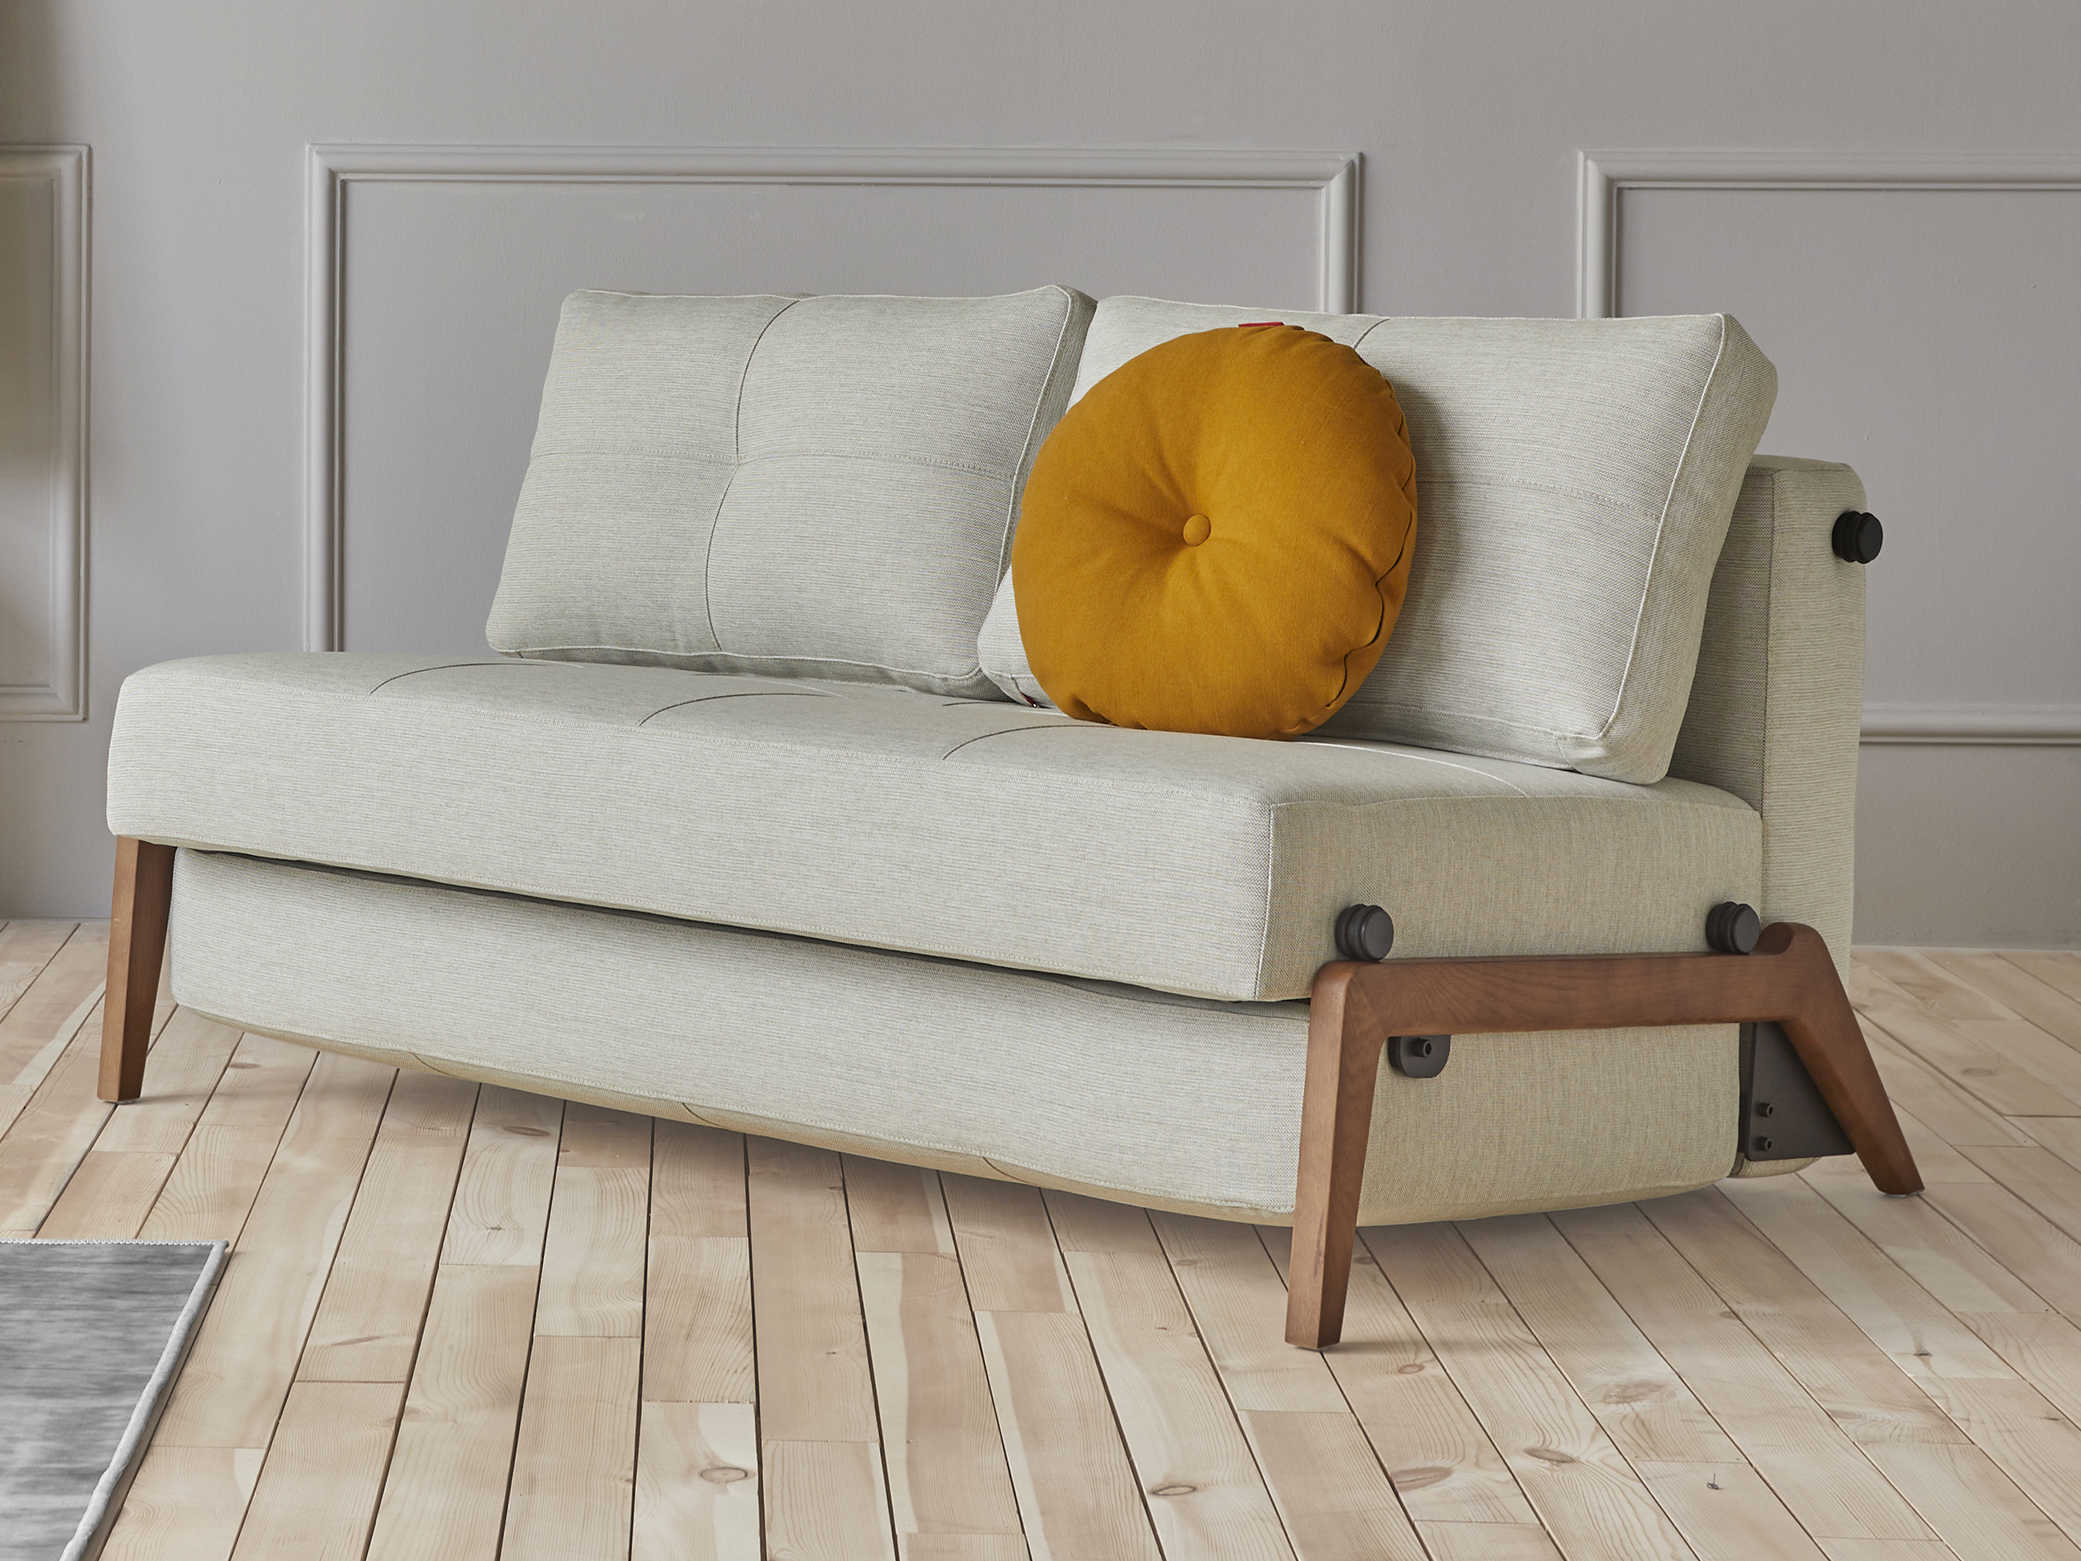 cubed sofa bed toronto